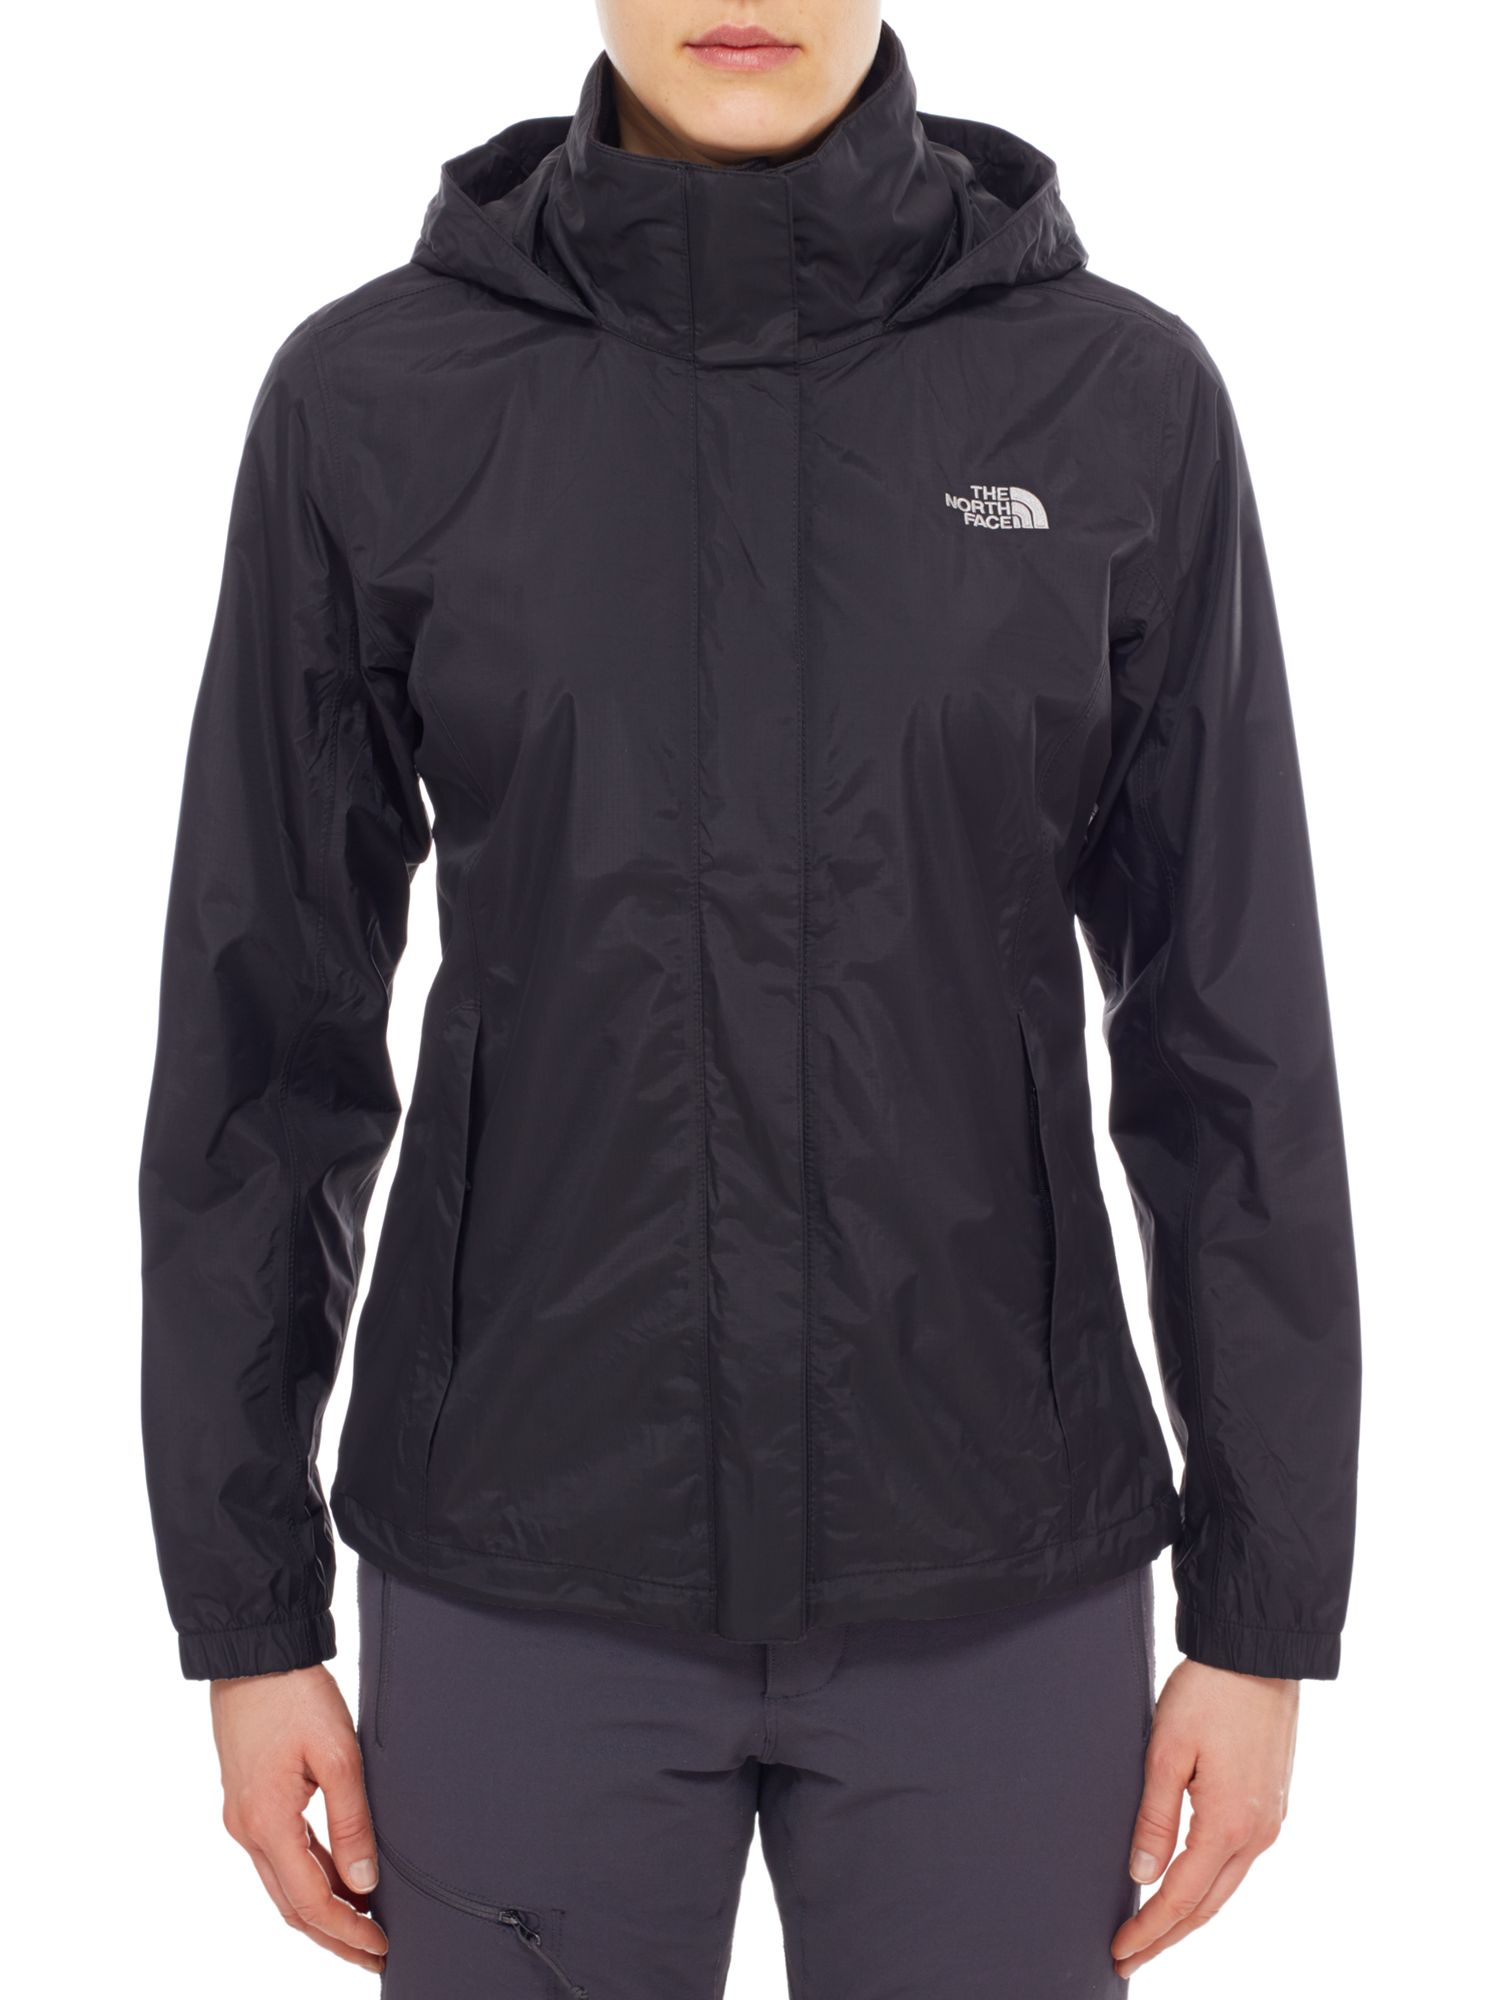 The North Face Resolve Waterproof Women's Jacket, Black at John Lewis ...